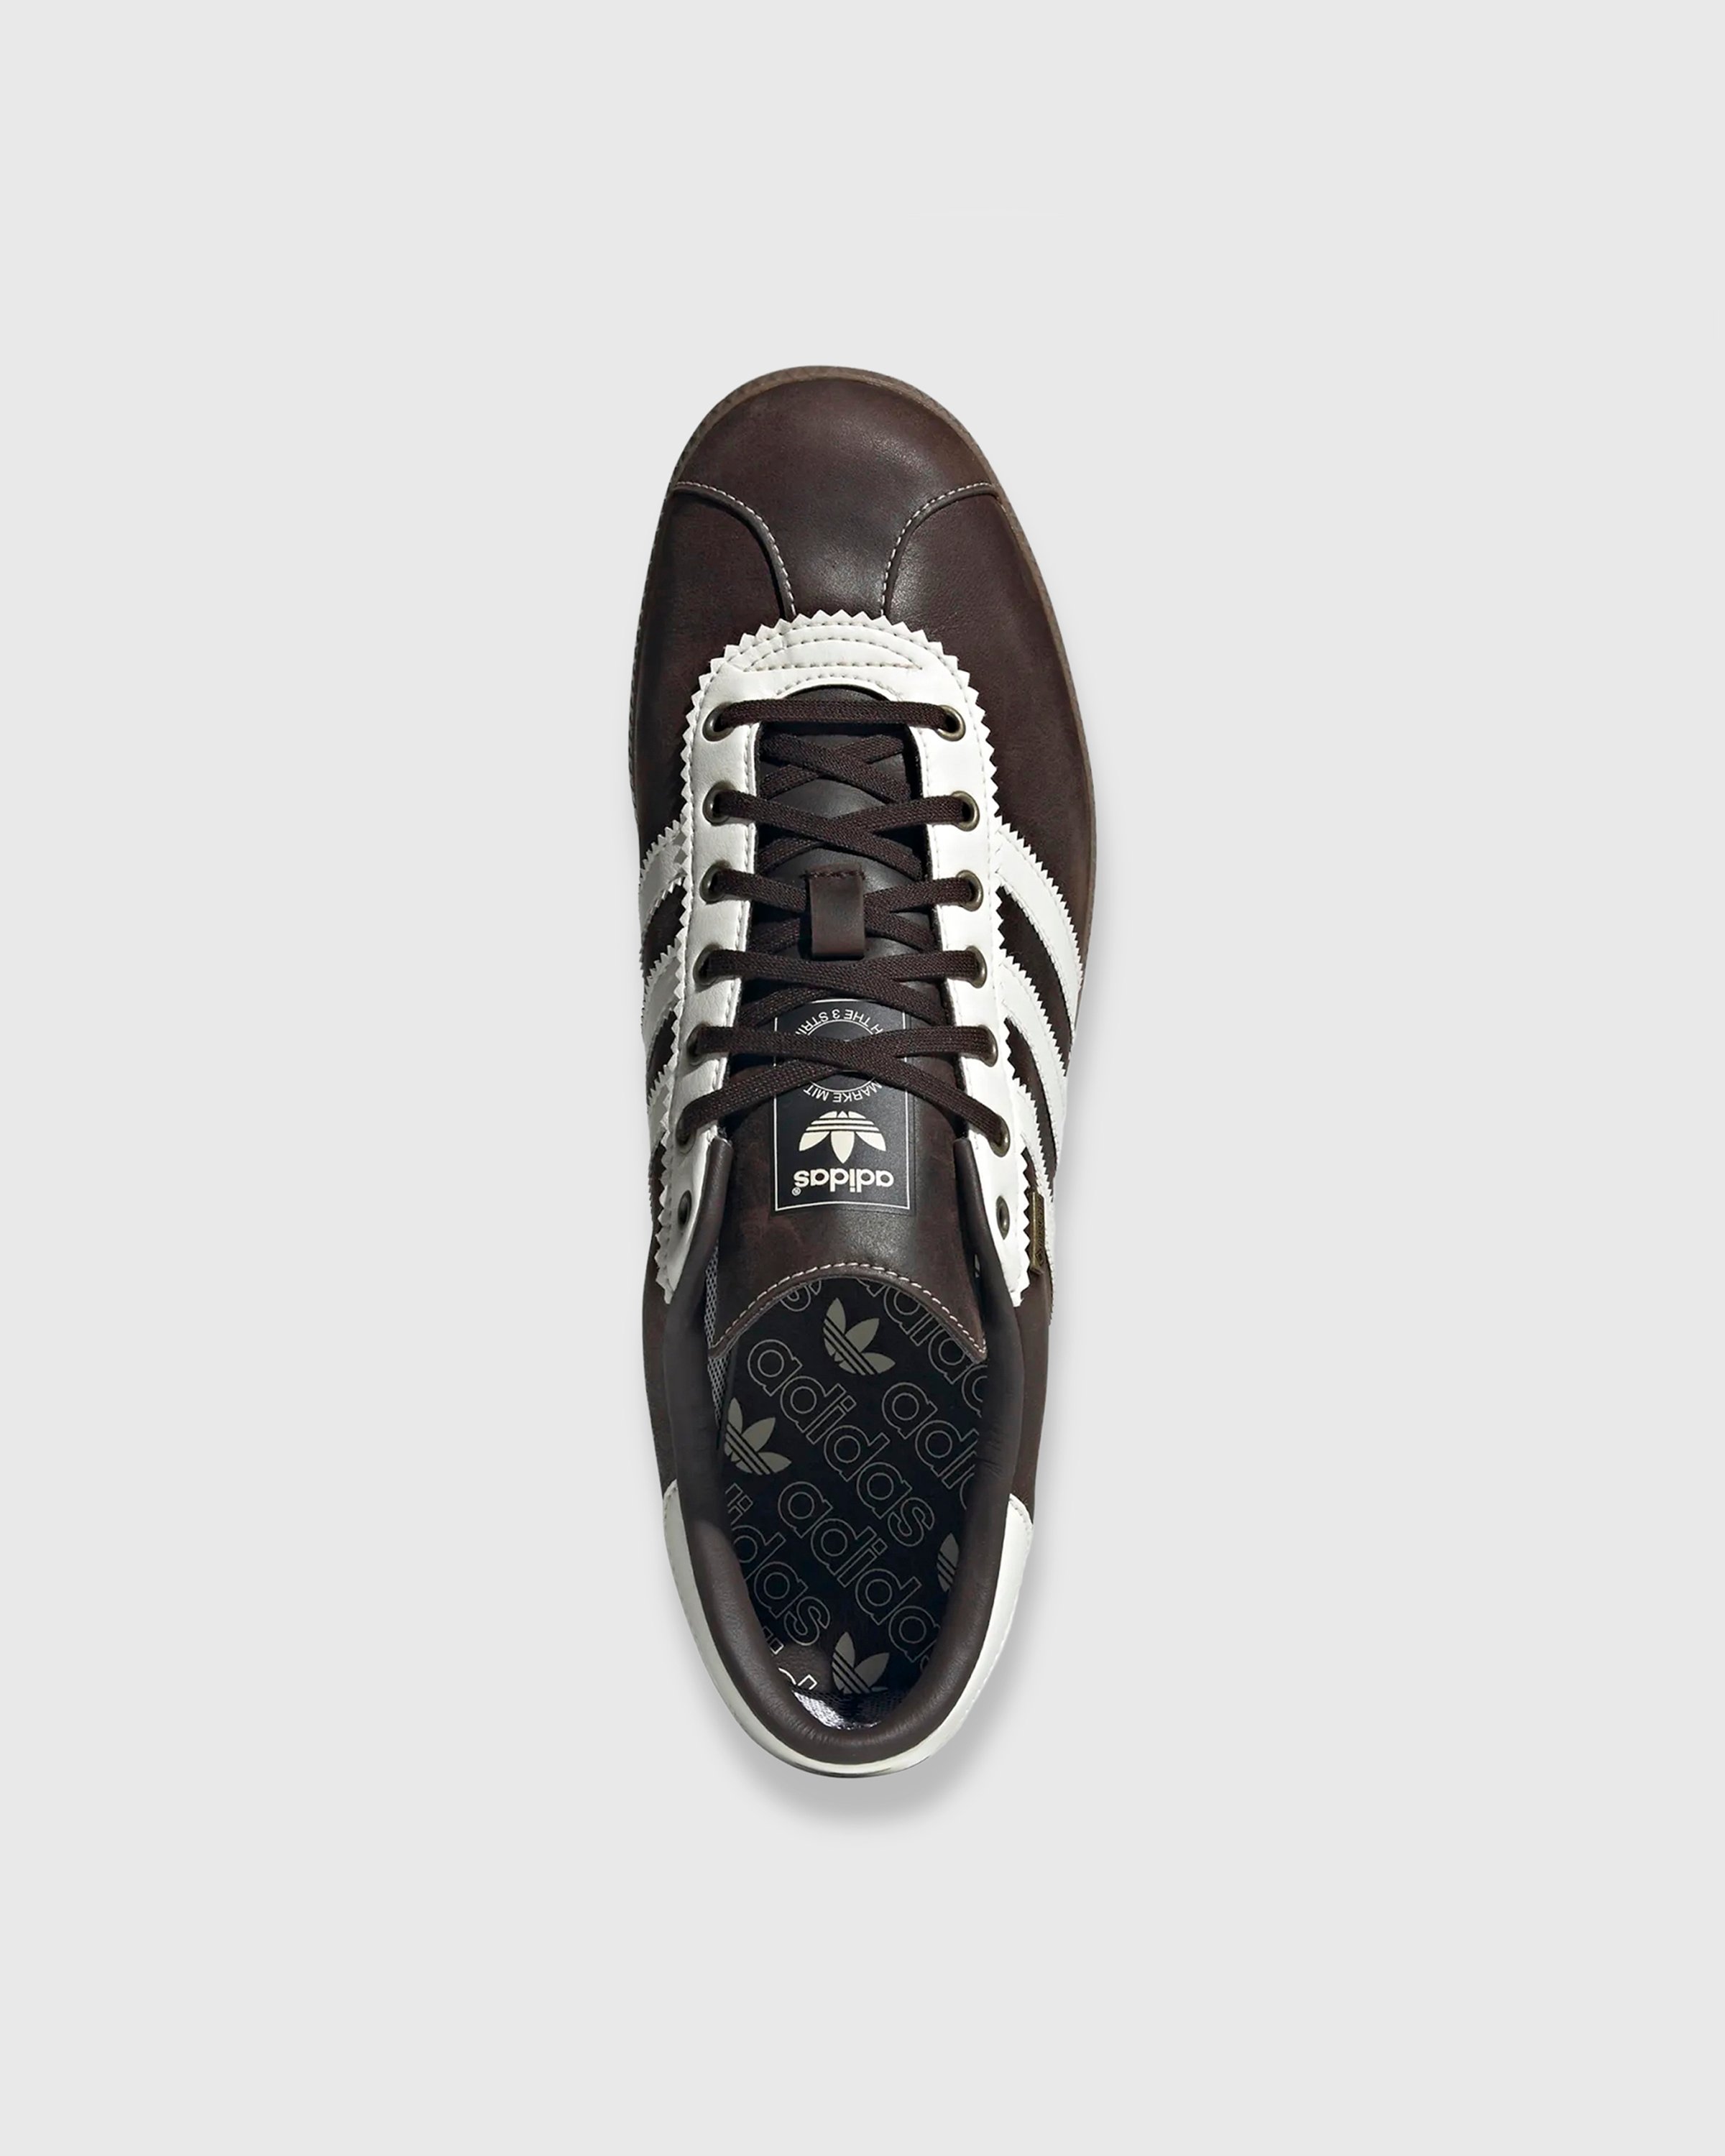 Adidas - BERN GTX            DBROWN/CREWHT/WONWHI - Footwear - Brown - Image 5